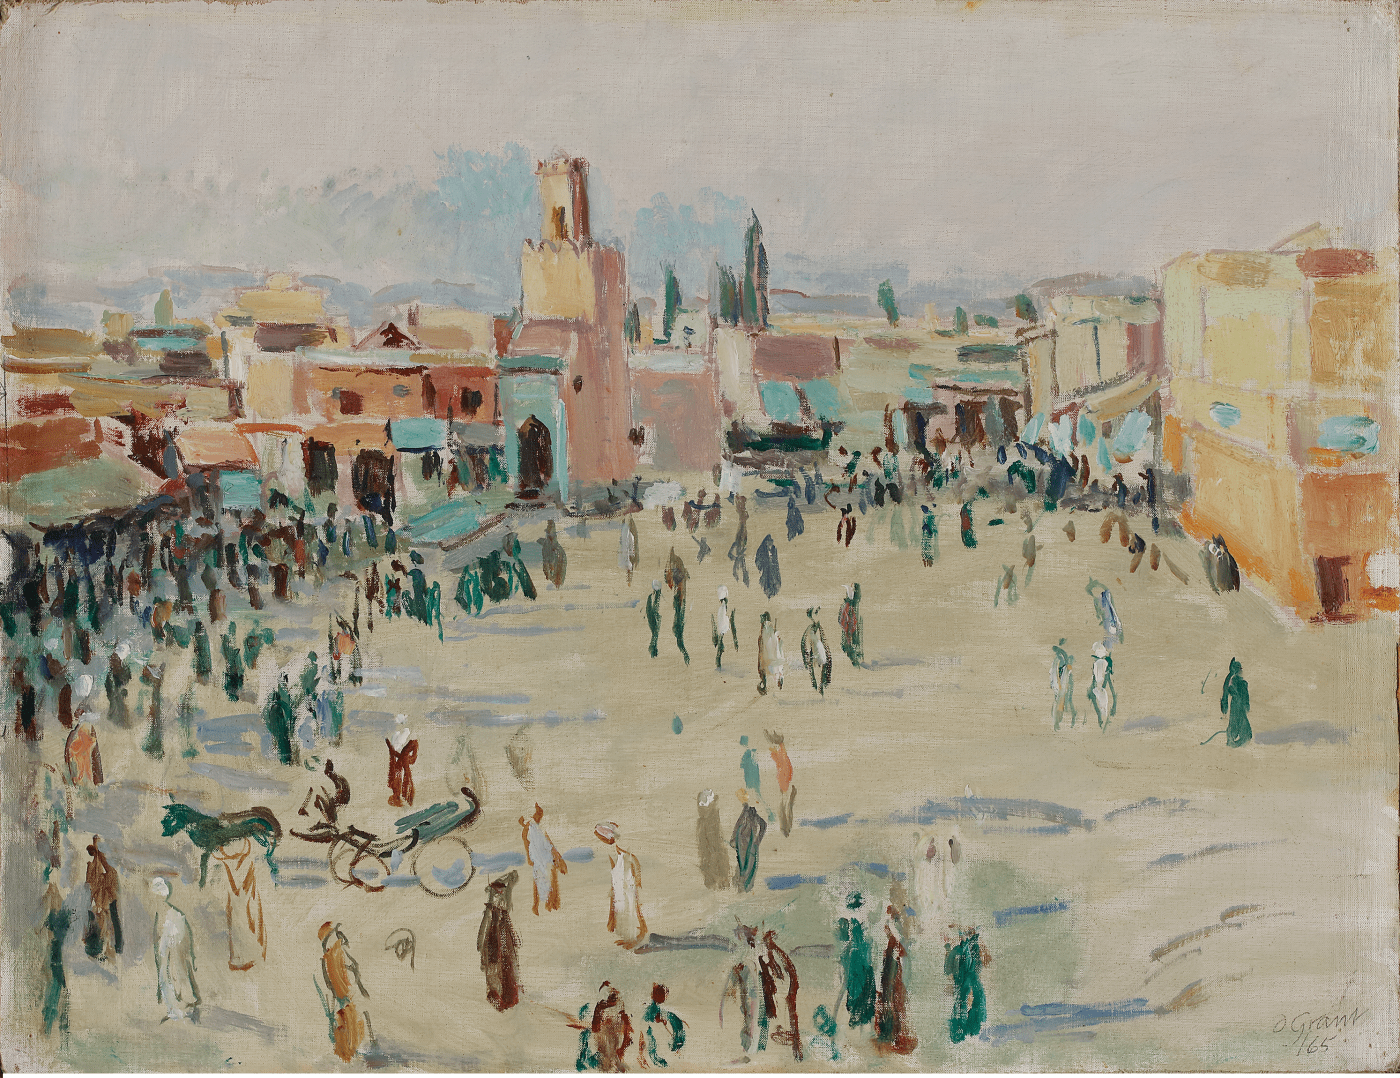 Duncan Grant, the square in Marrakesh